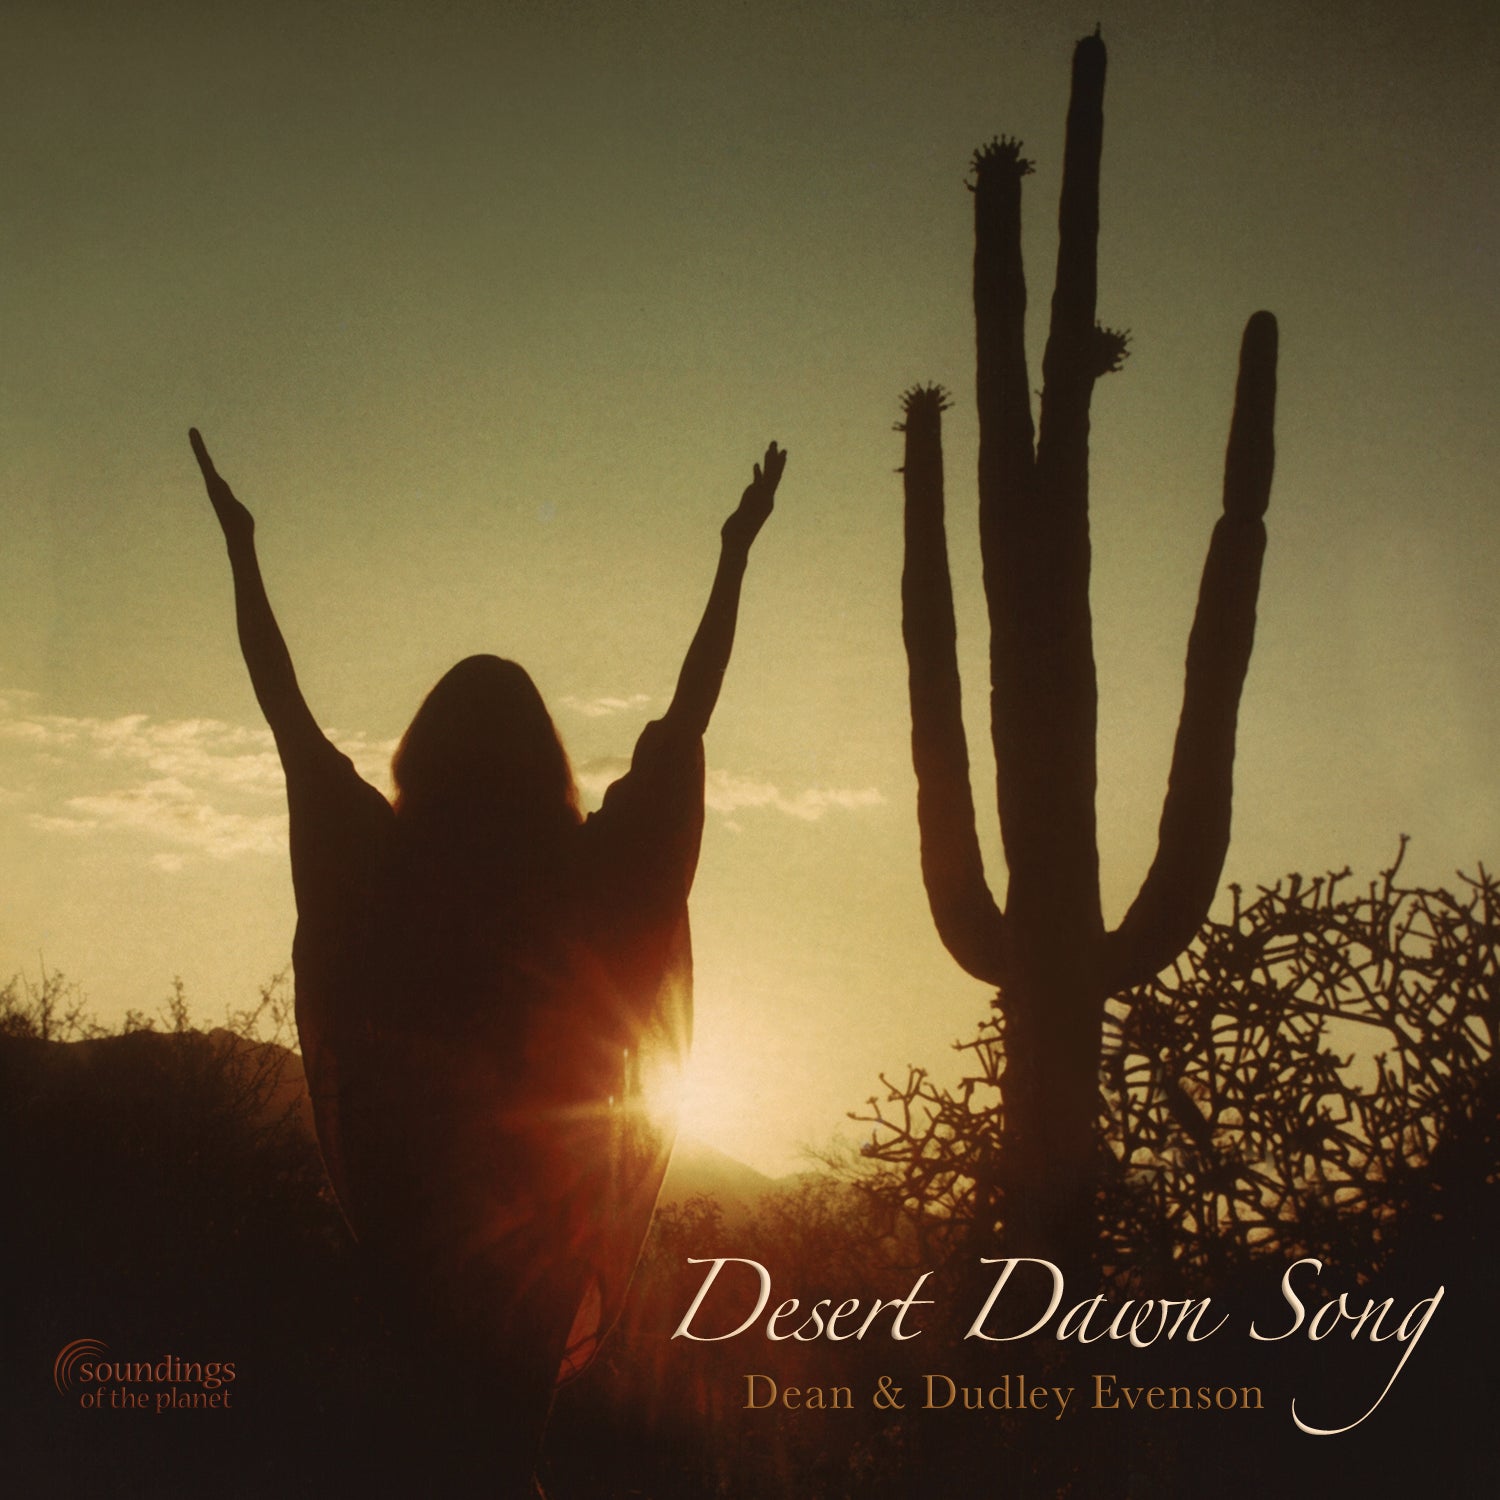 Desert Dawn Song Album Cover